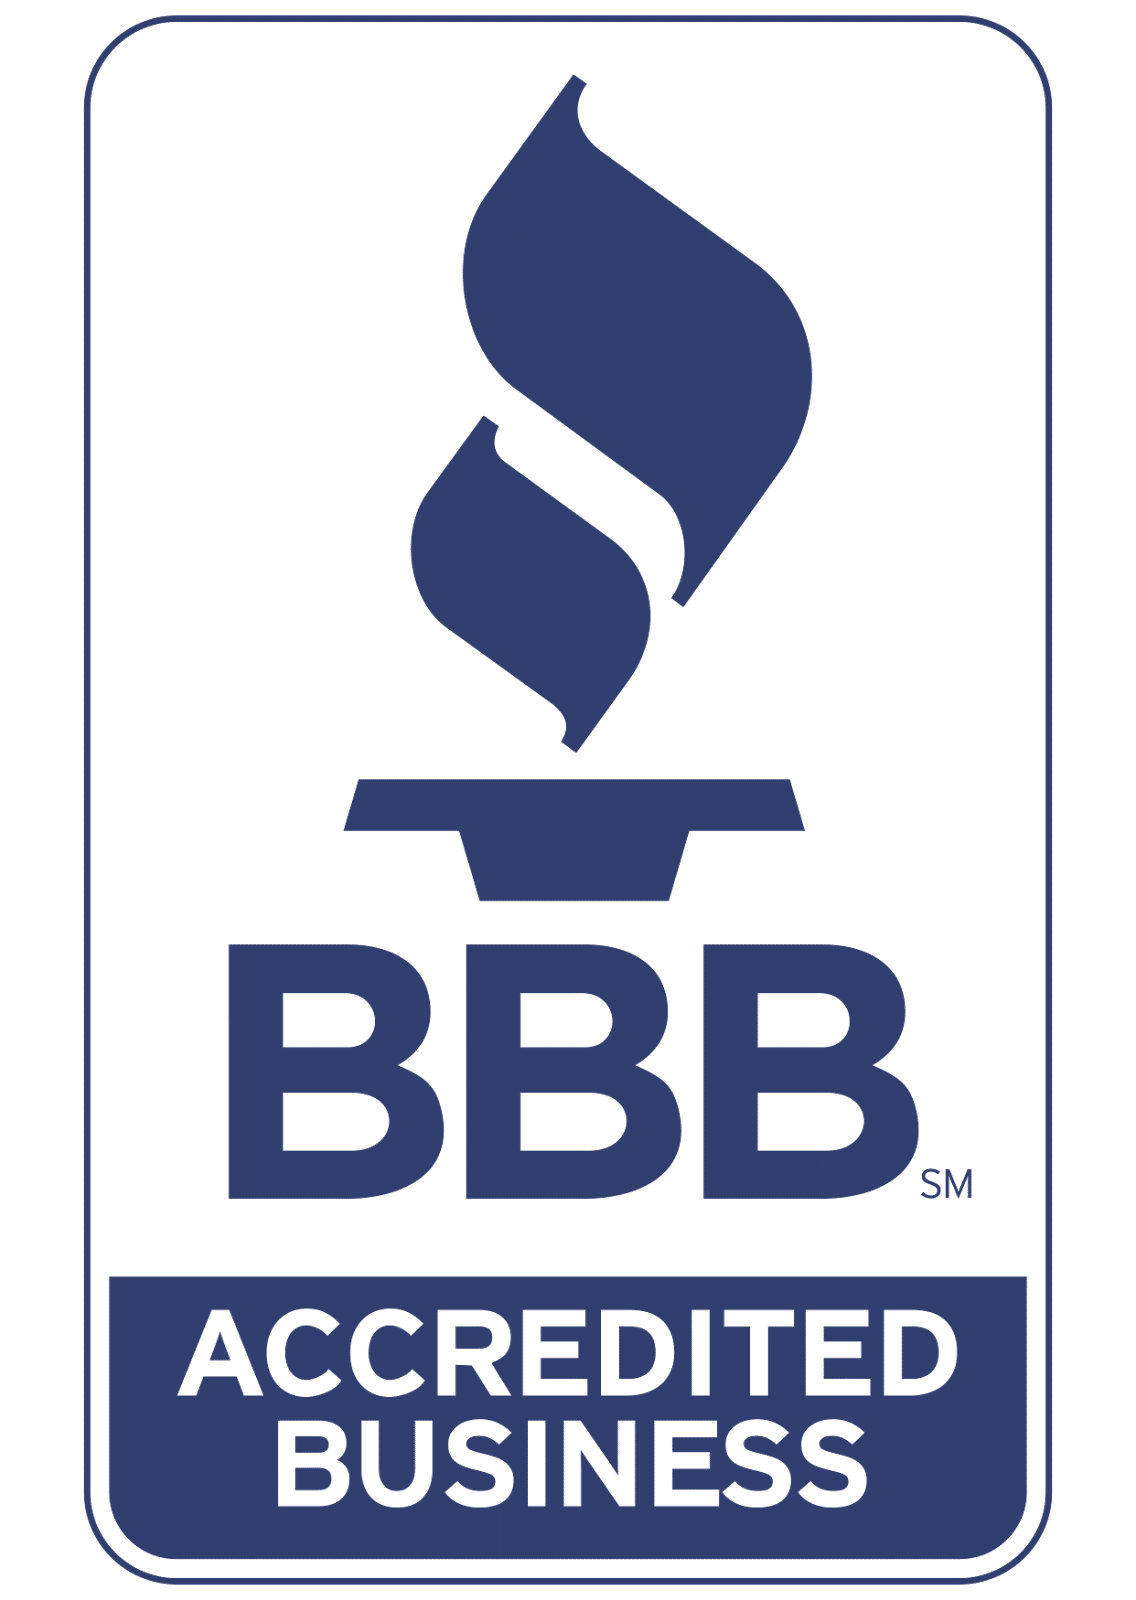 BBB Better Business Bureau logo vector - Home Pro Roofing